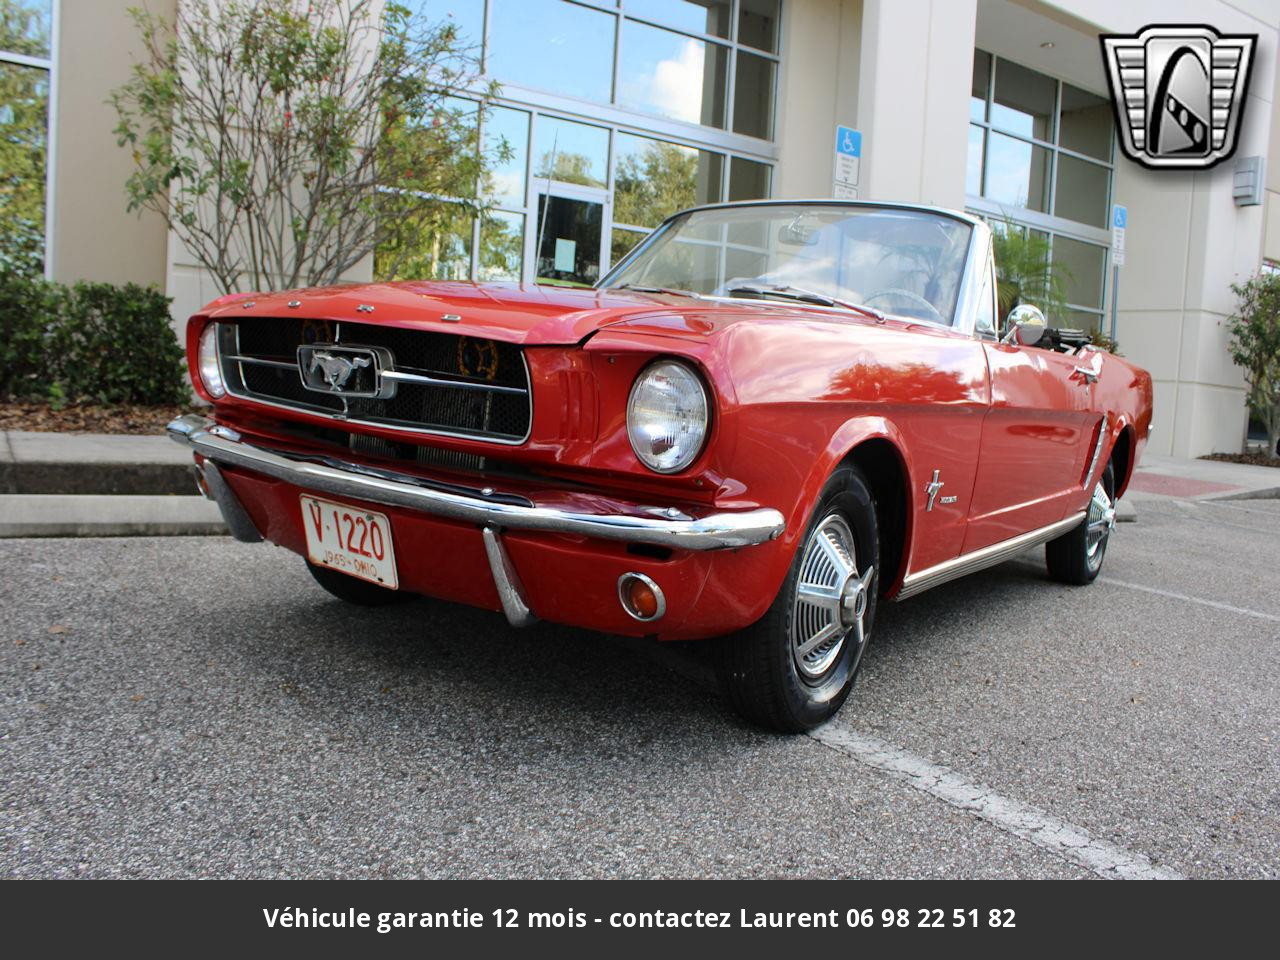 Ford Mustang V8 289 1965 prix tout compris